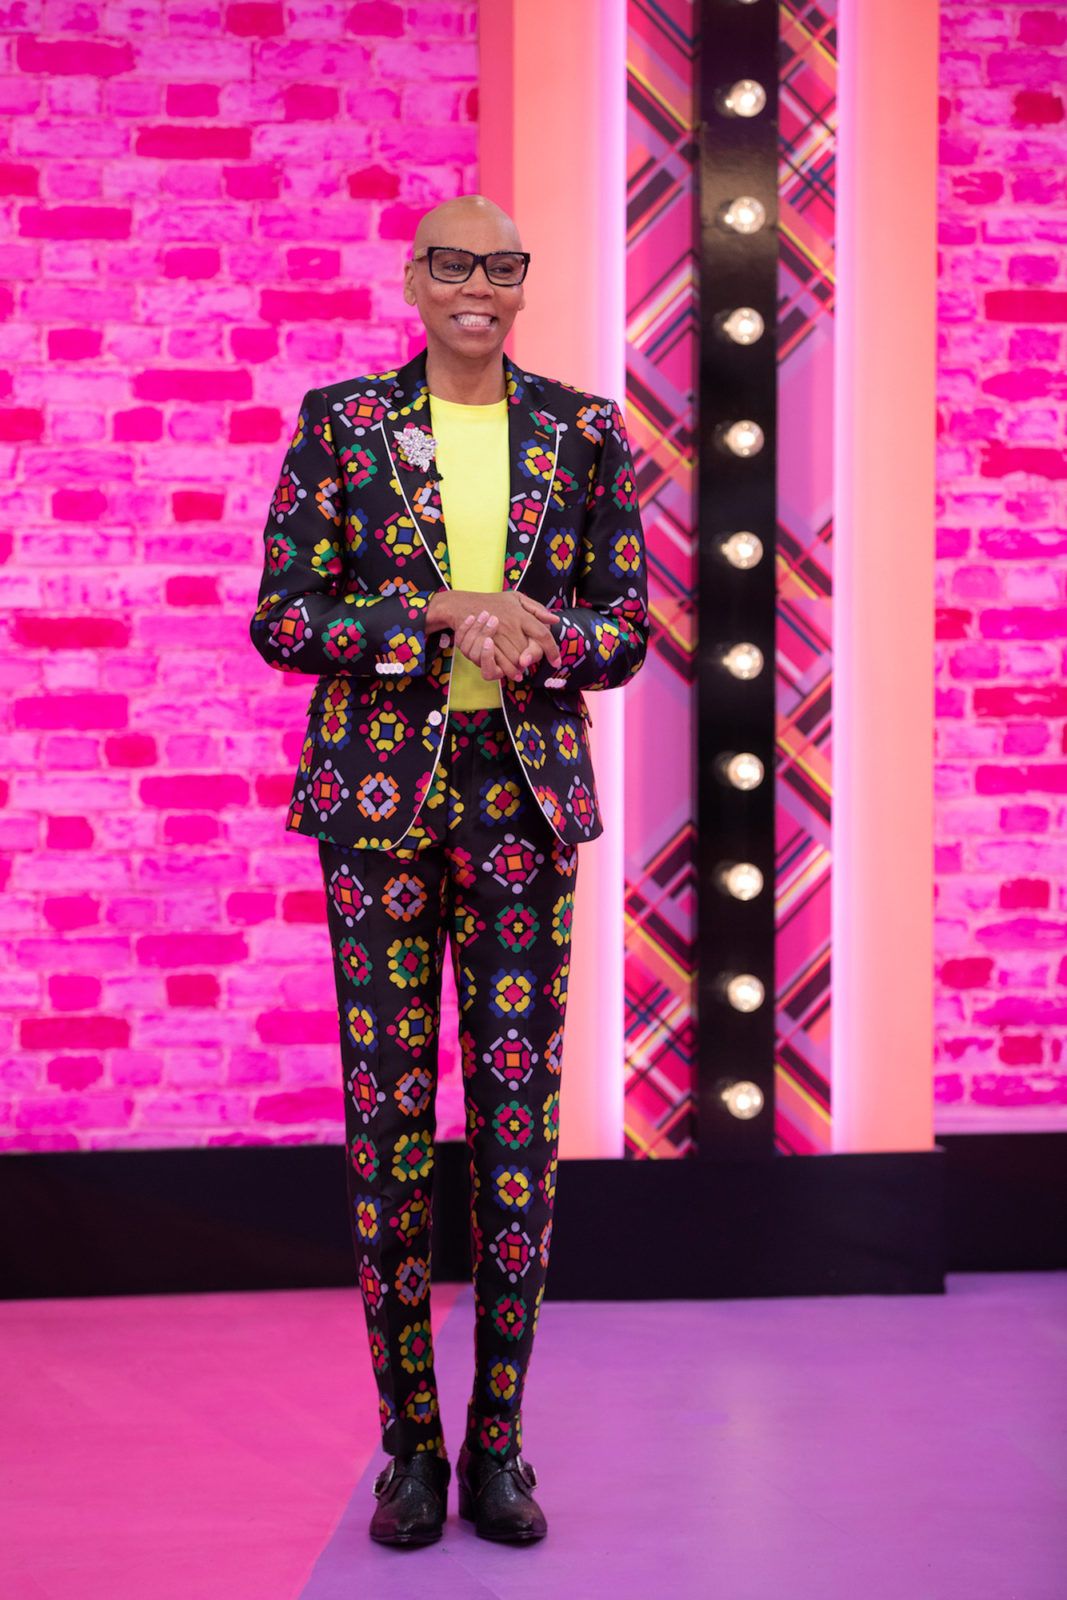 Ru Paul Has Fabulous Suits On Drag Race 